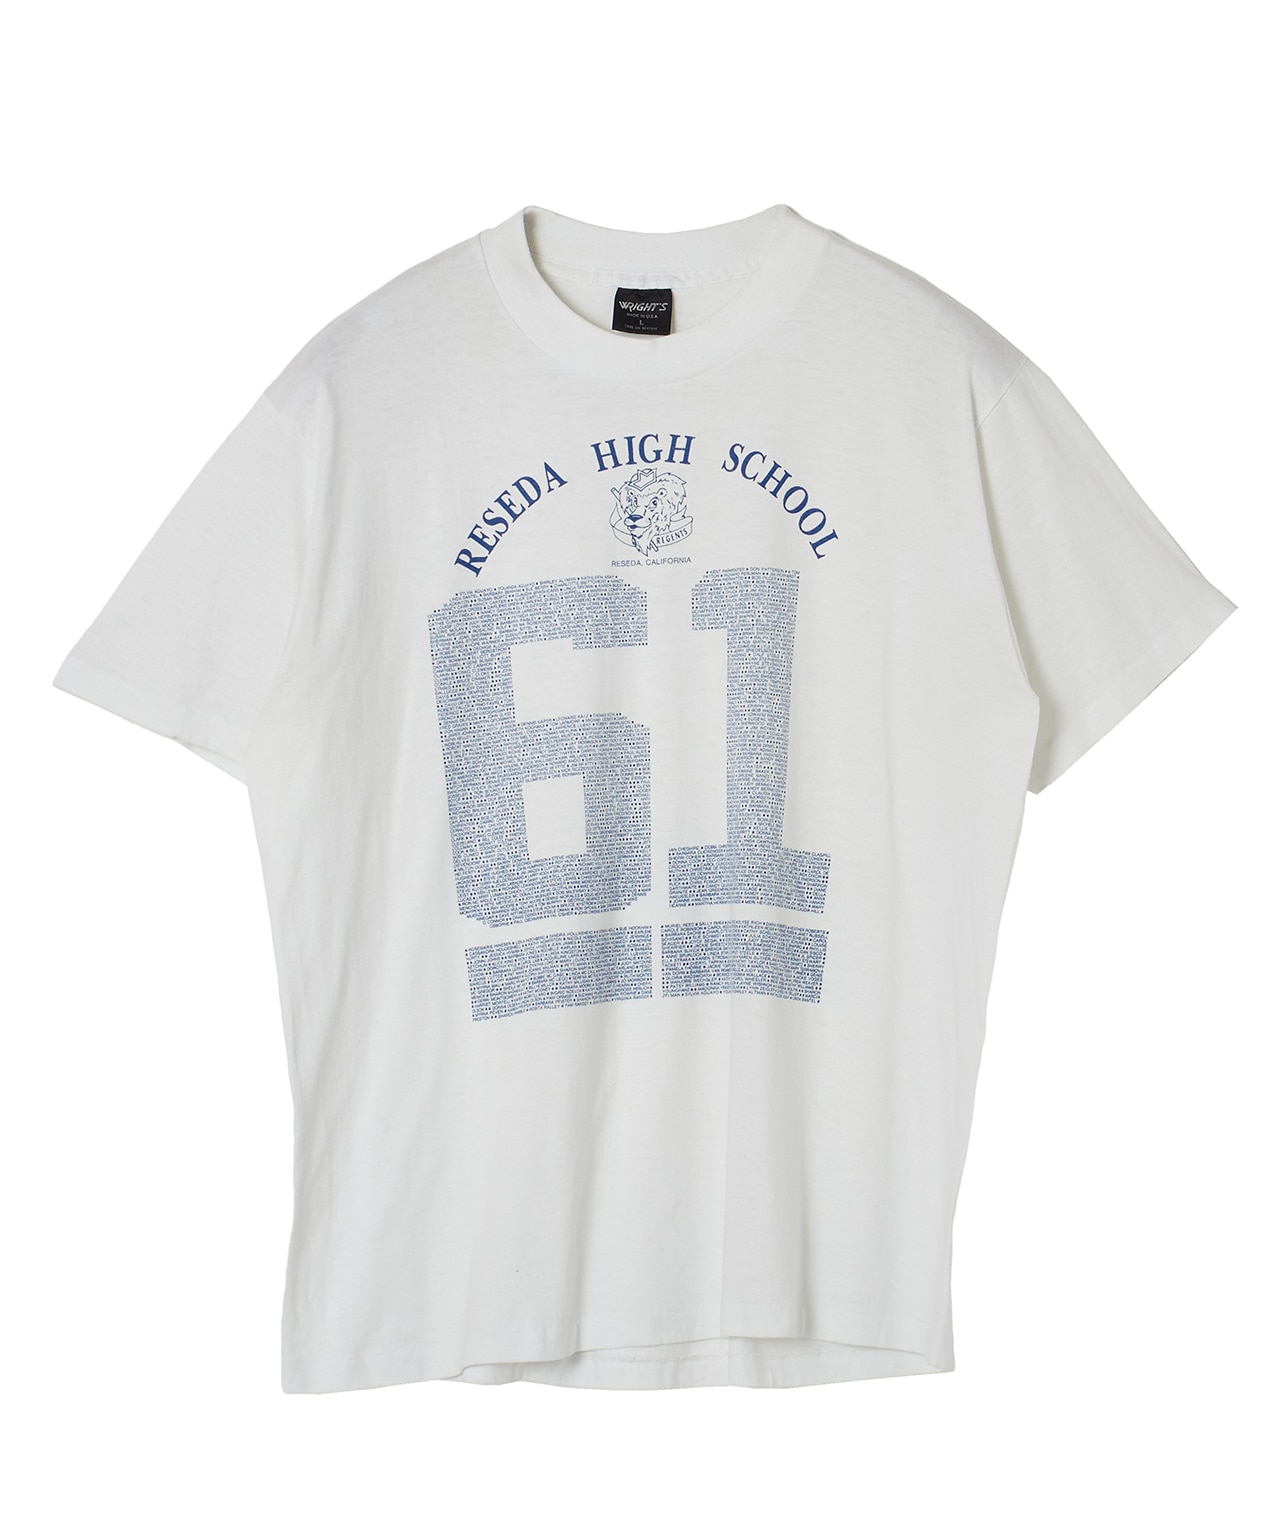 USED/RESEDA HIGH SCHOOLプリントTシャツ 詳細画像 ホワイト 1